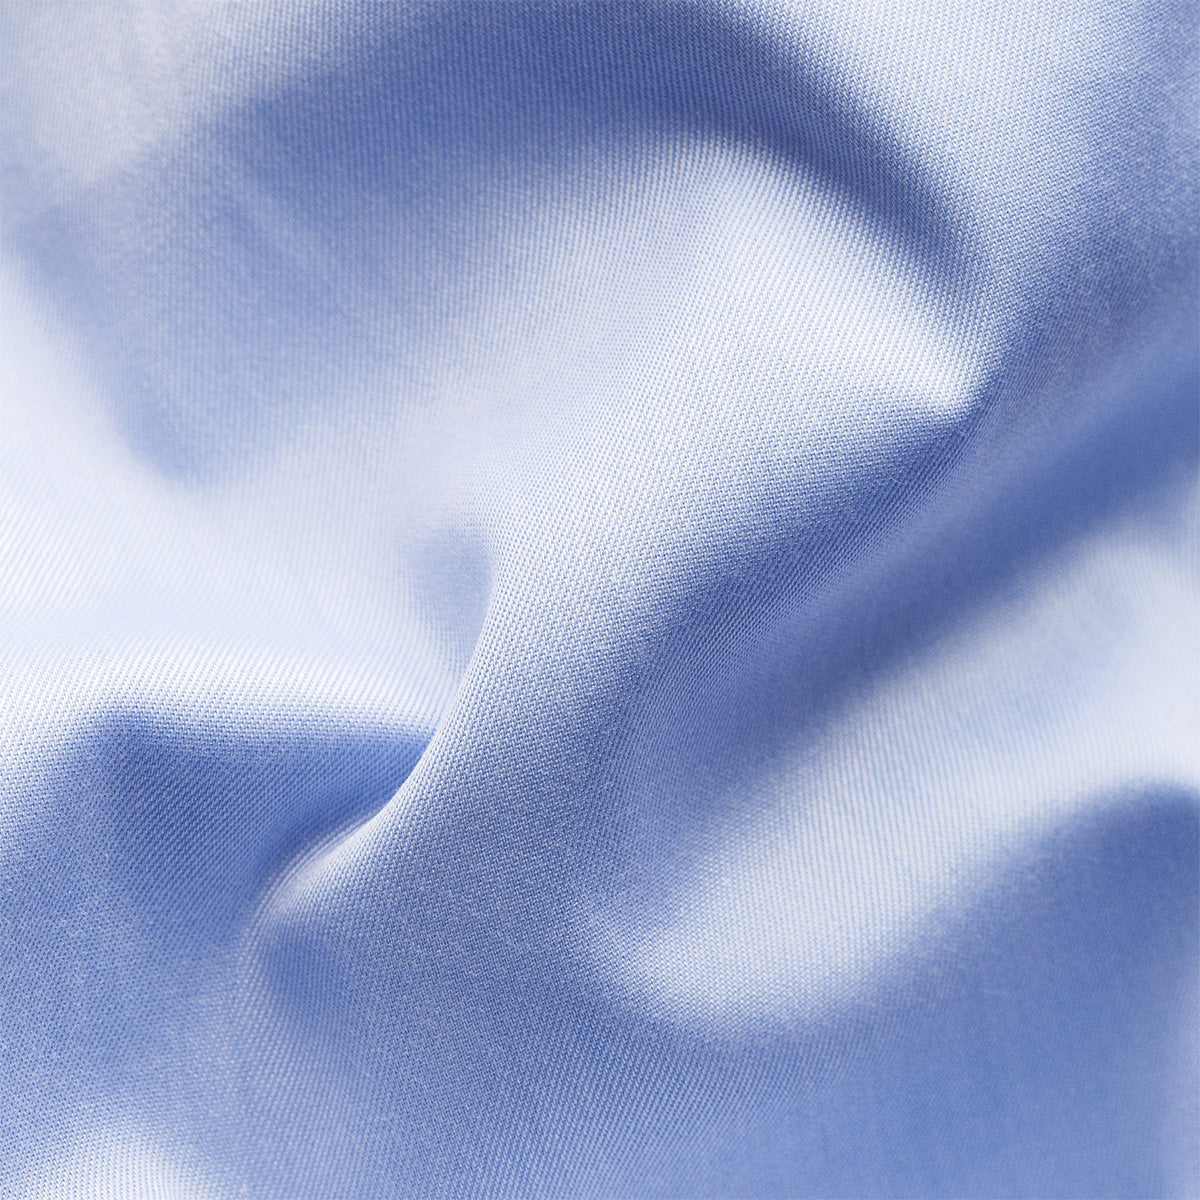 Blue Floral Trim Signature Twill Contemporary Fit Shirt  Eton   